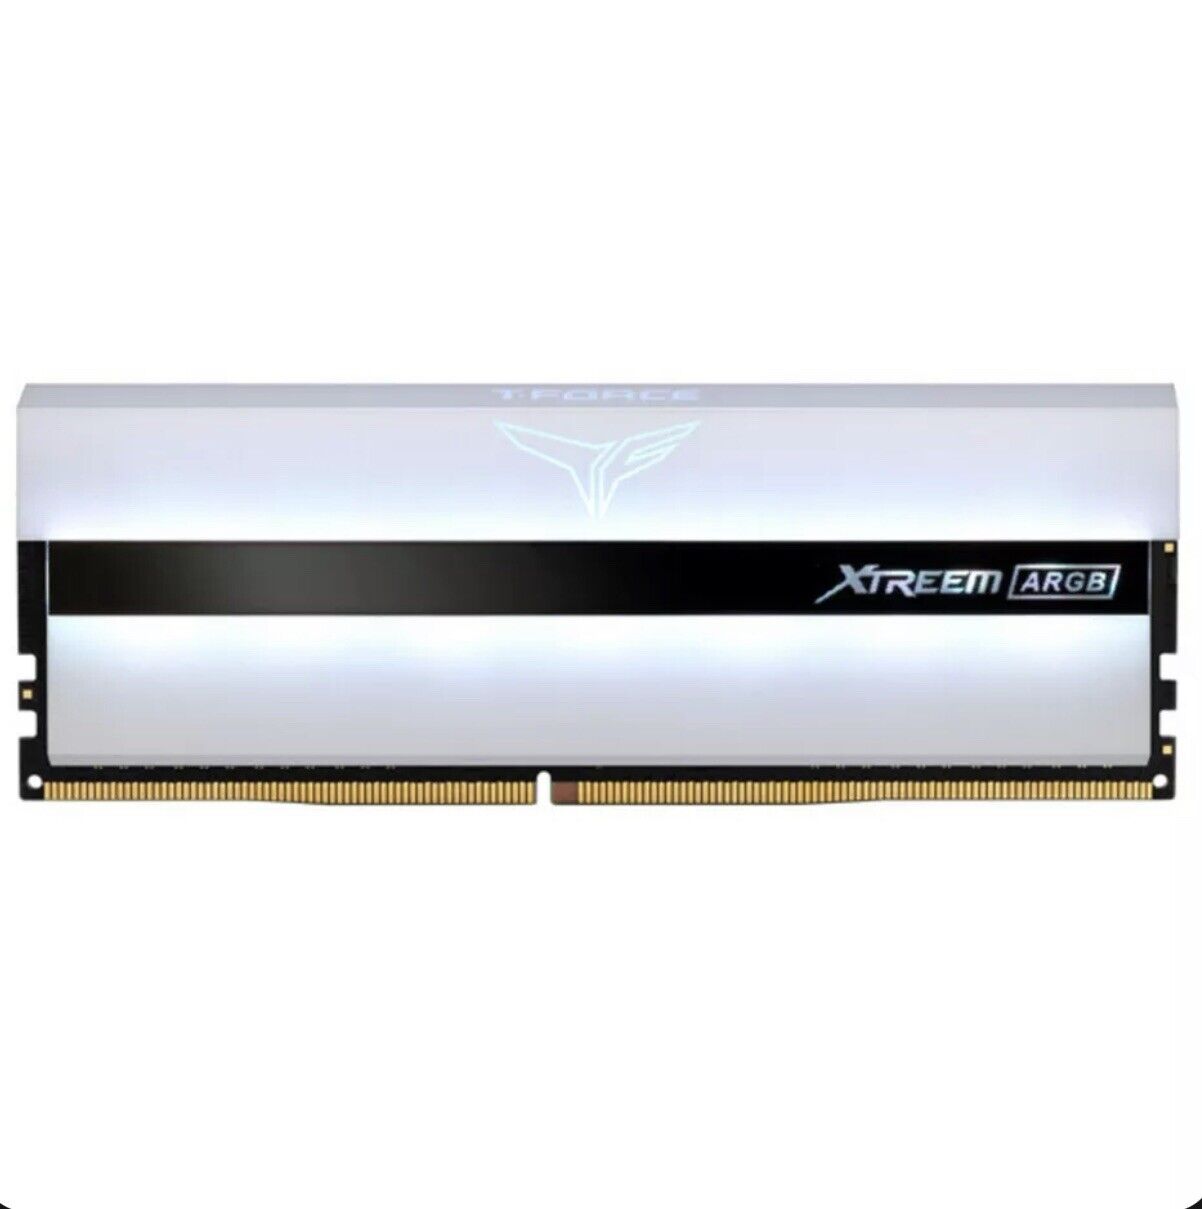 T-Force XTREEM ARGB DDR4 16GB (16x1) 3200MHz System Memory RAM | RGB GAMING